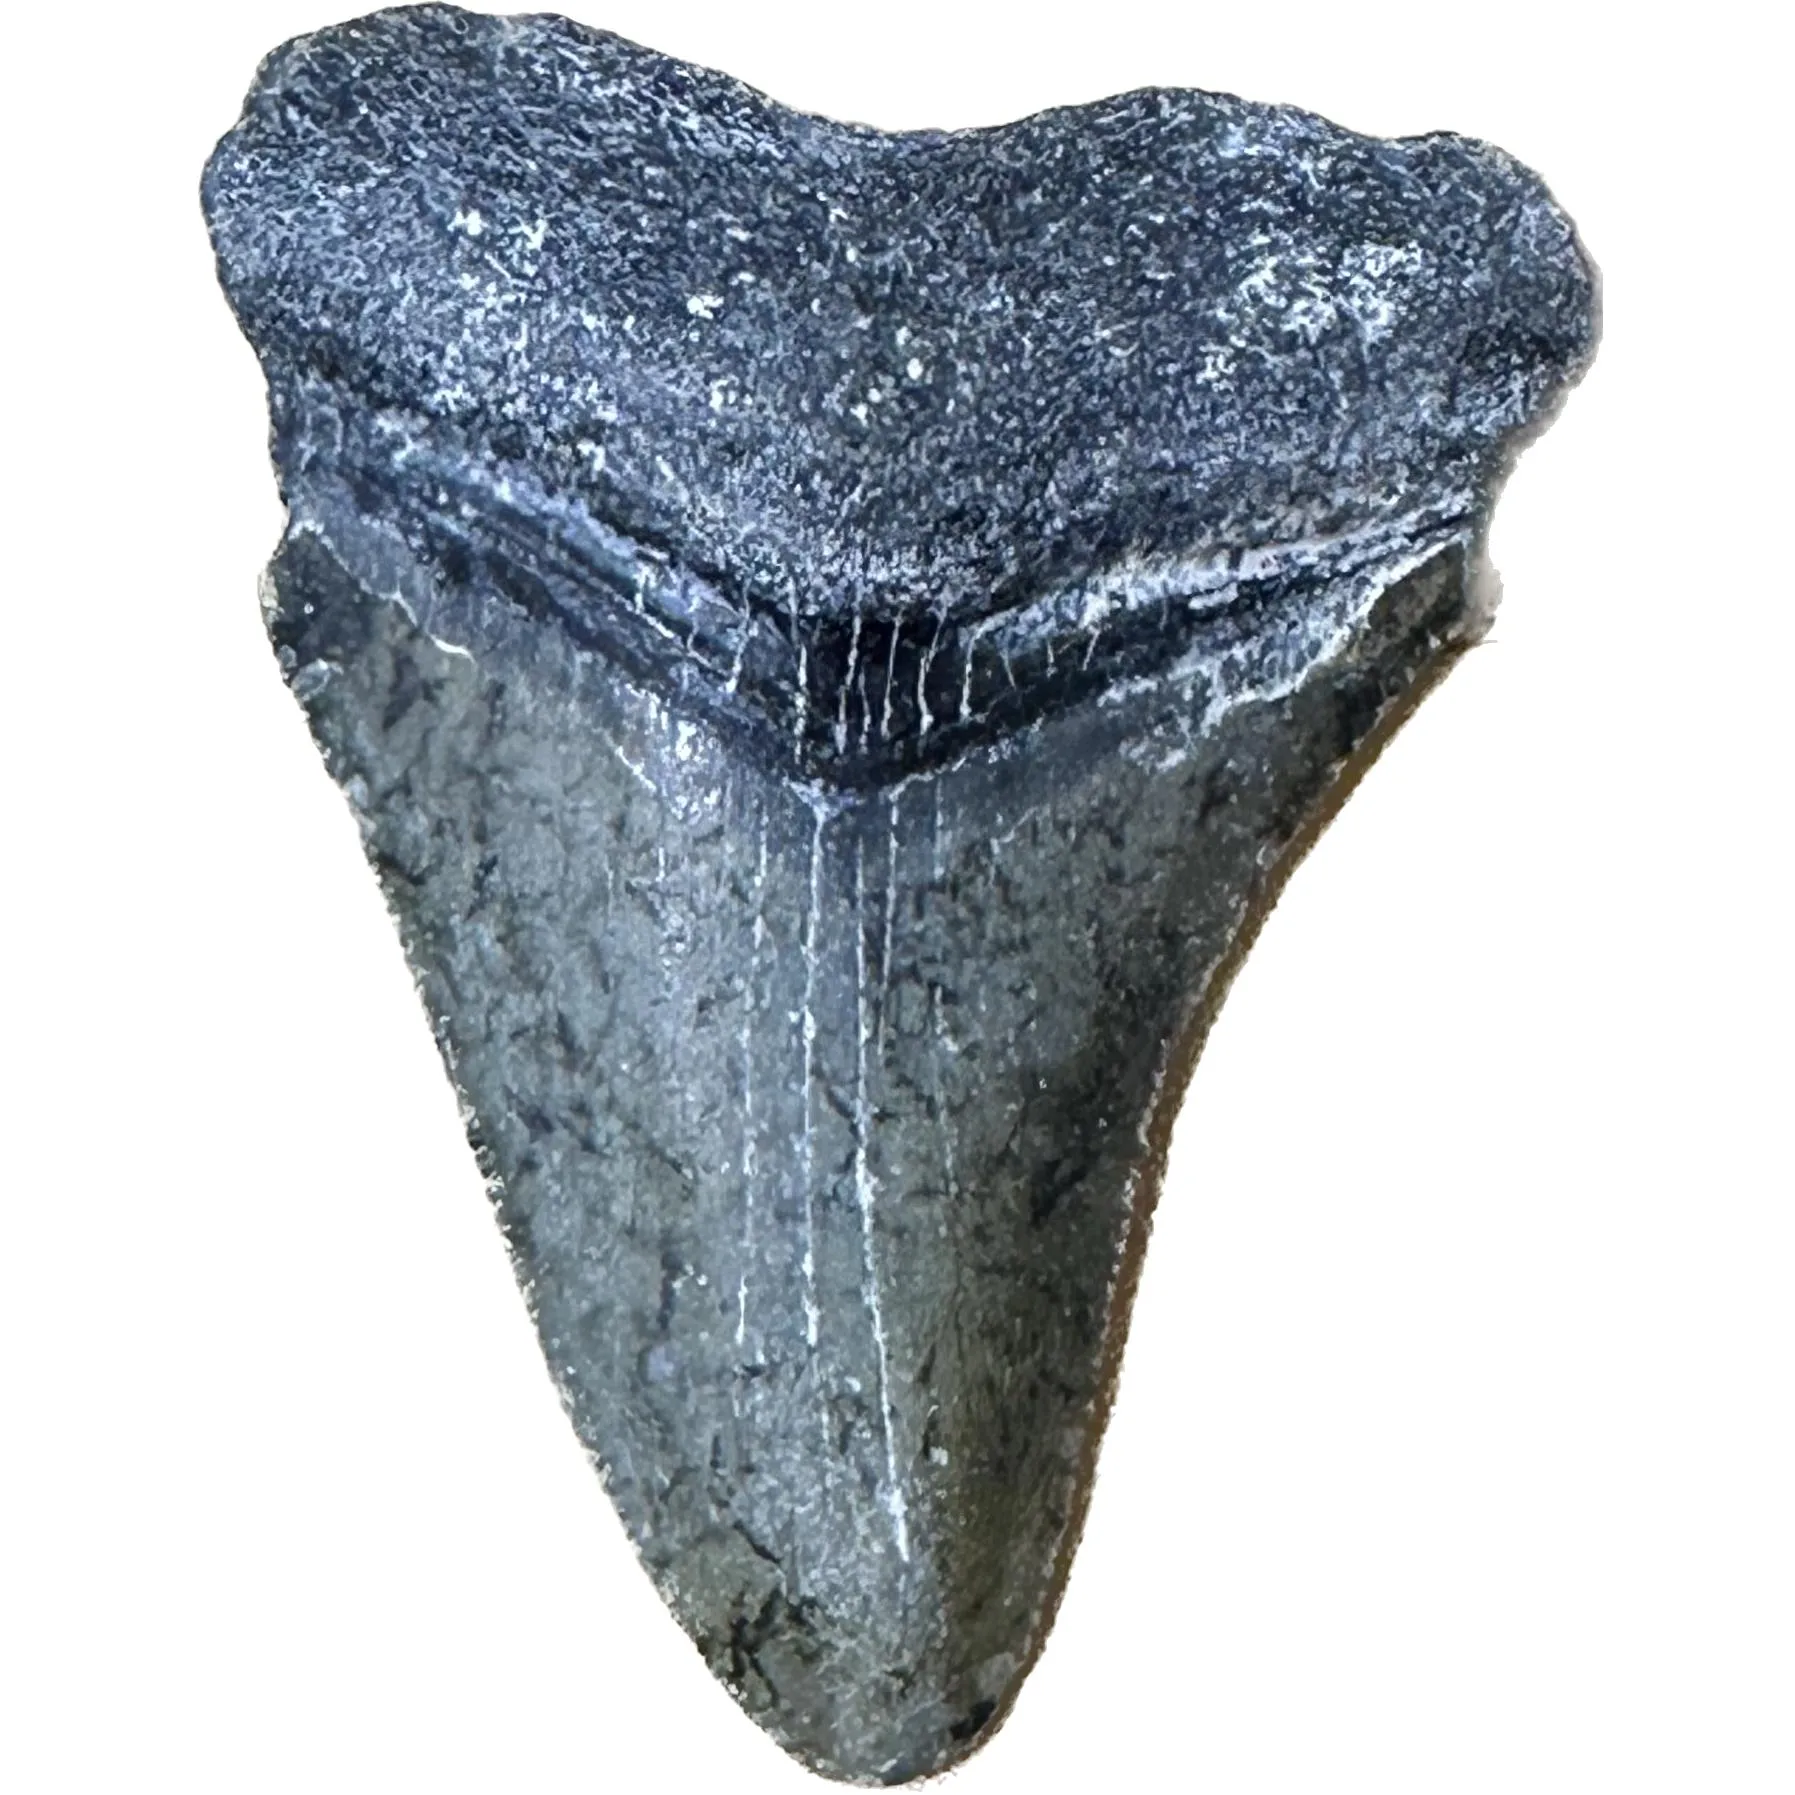 Megalodon Tooth  Bone Valley, Florida 1.96 inch Prehistoric Online